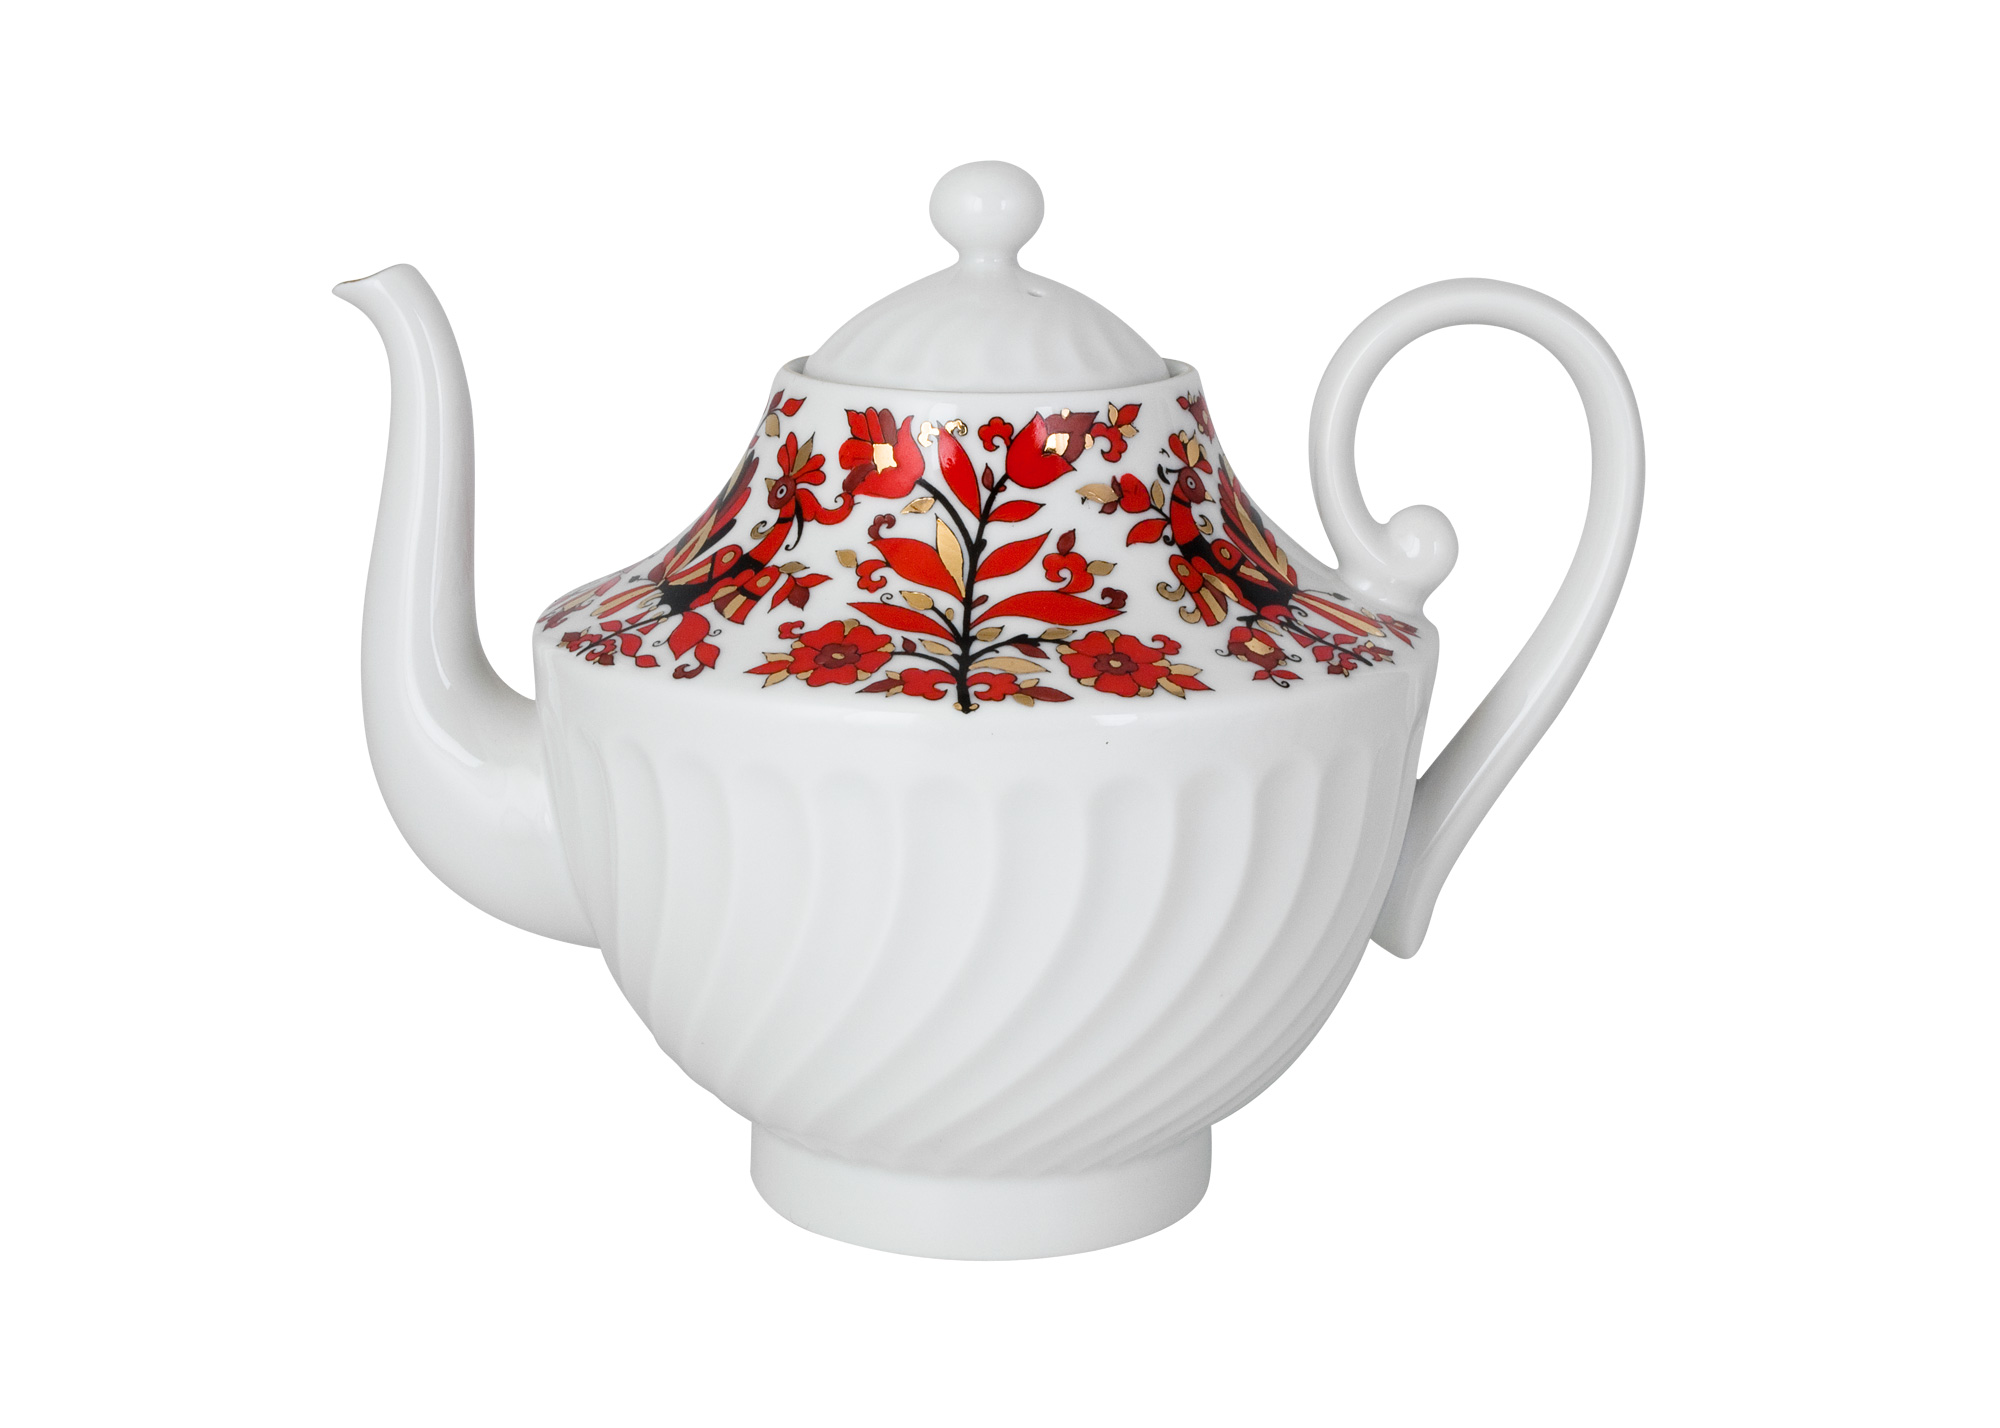 Buy Folklorette Large Teapot at GoldenCockerel.com